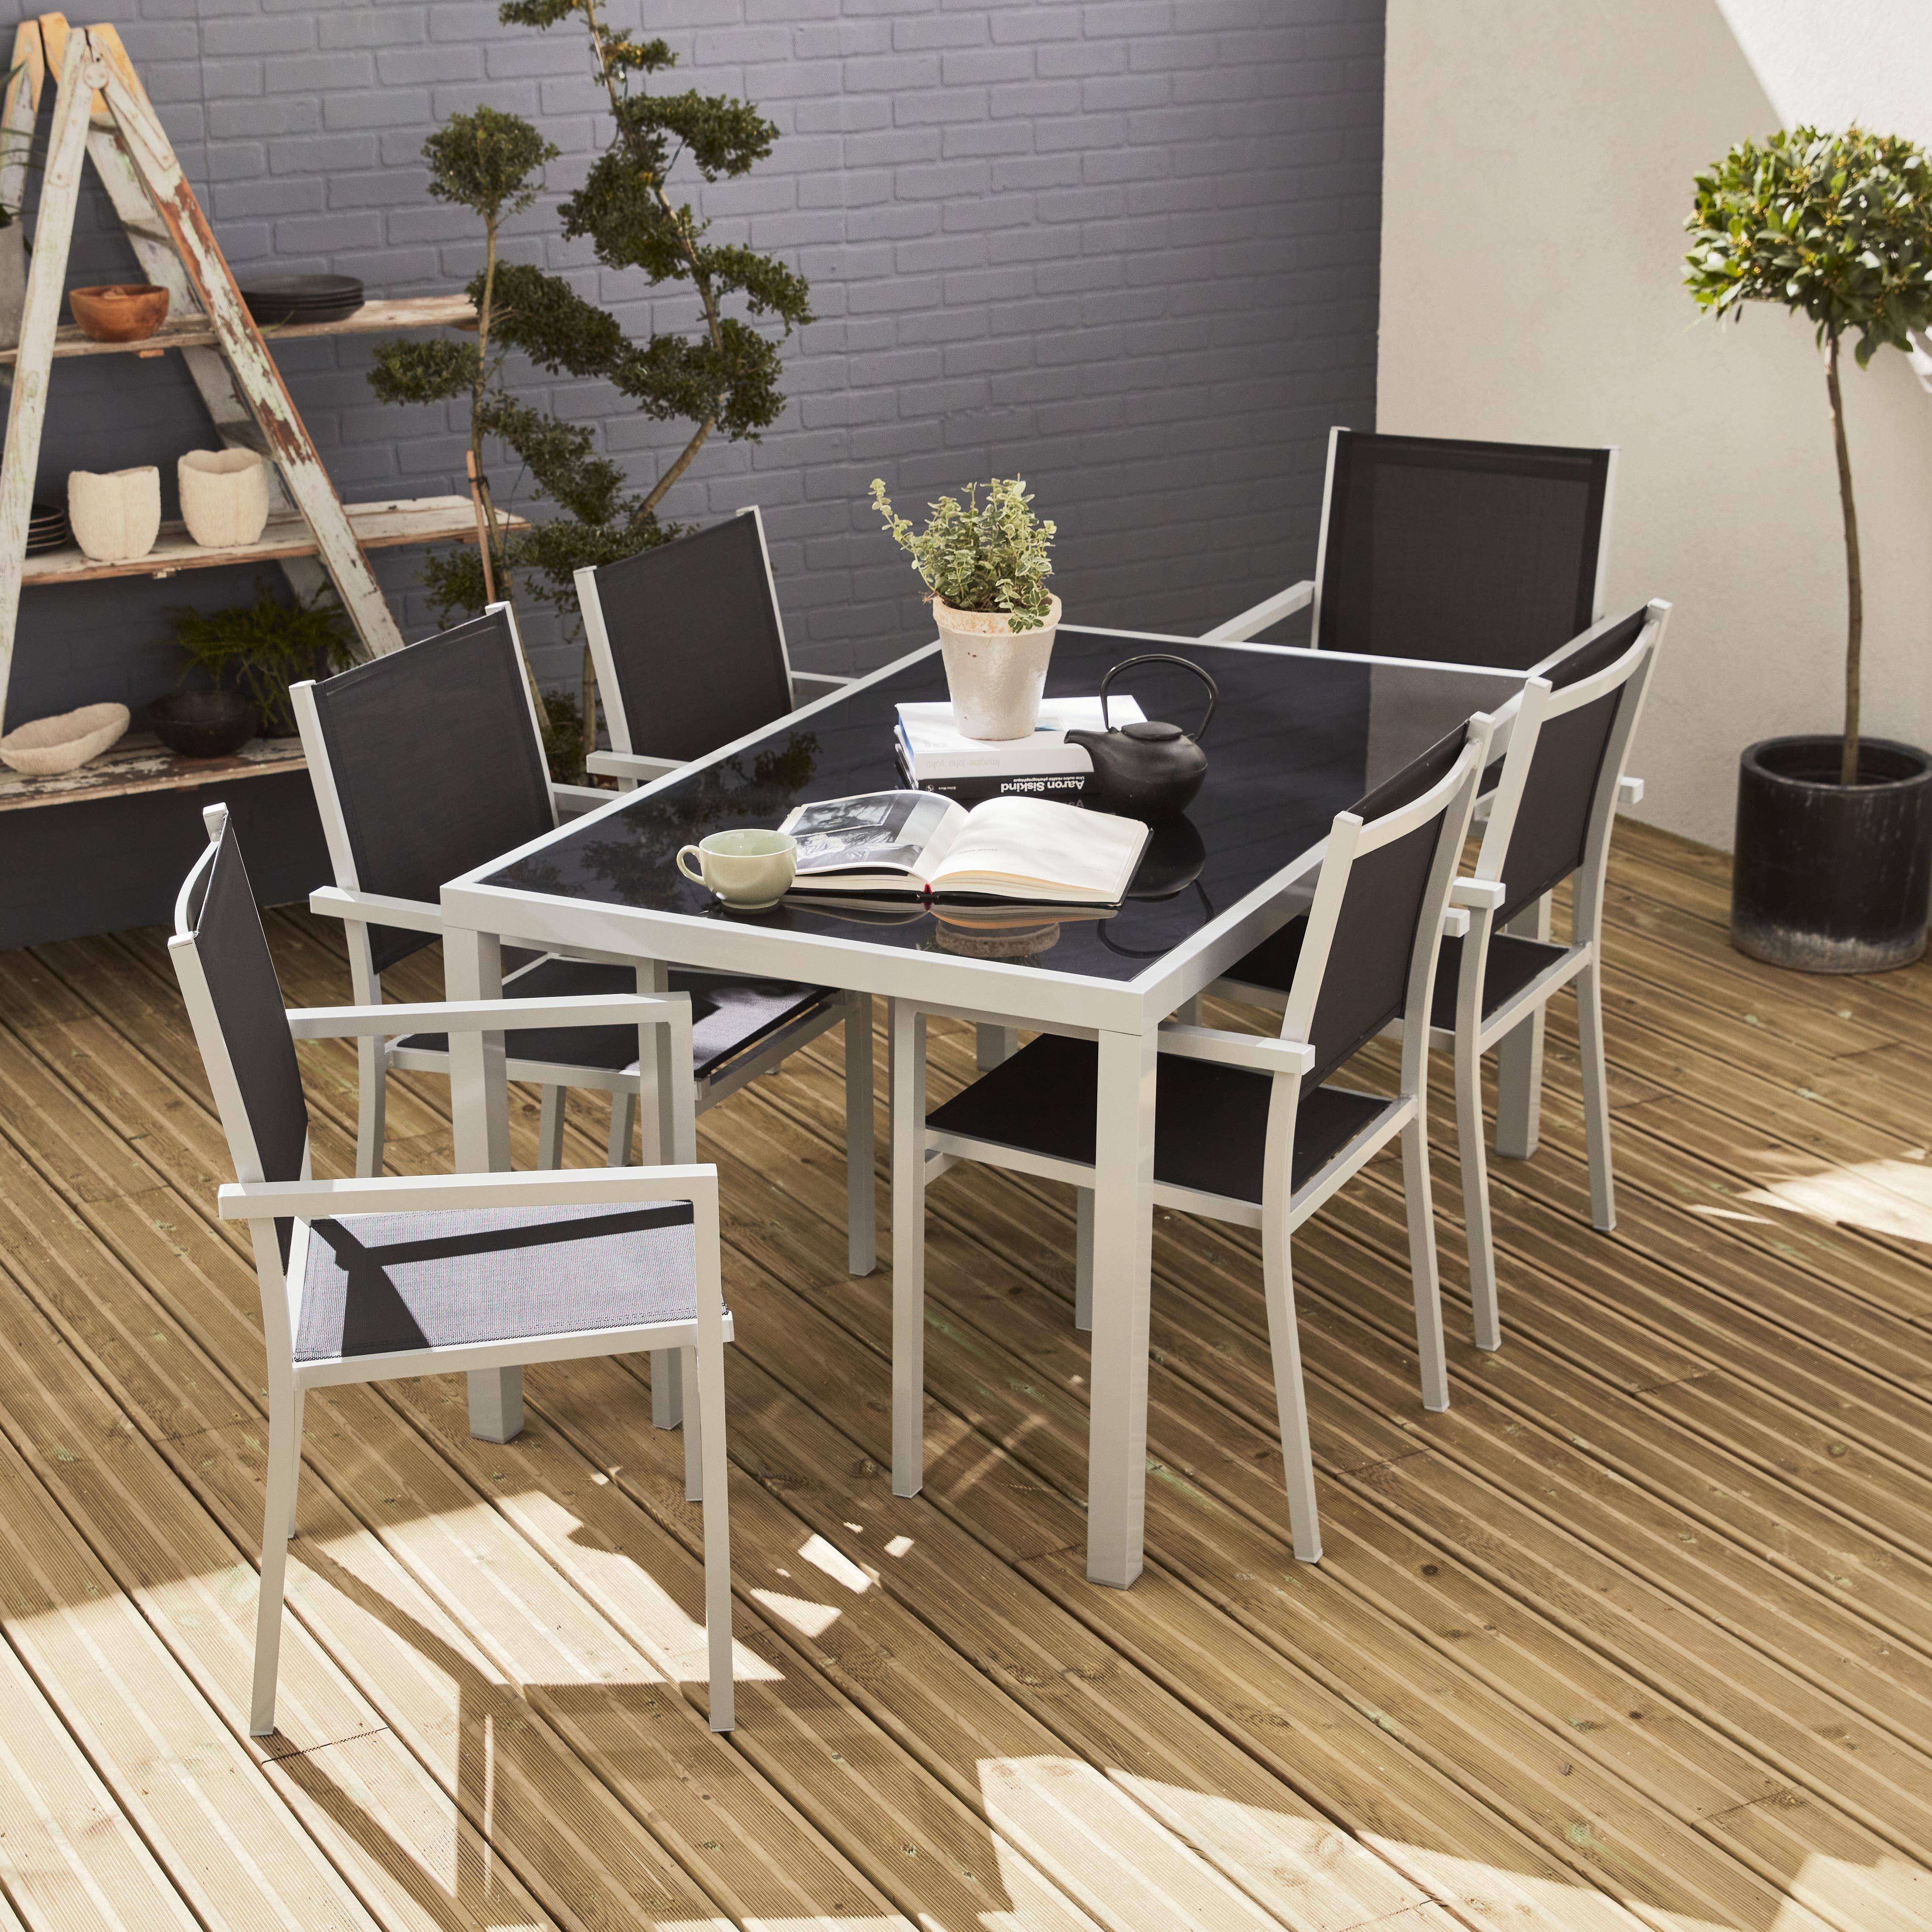 Gartengarnitur aus Aluminium und Textilene - Capua - Grau, Schwarz - 6 Plätze - 1 großer rechteckiger Tisch, 6 stapelbare Sessel Photo1